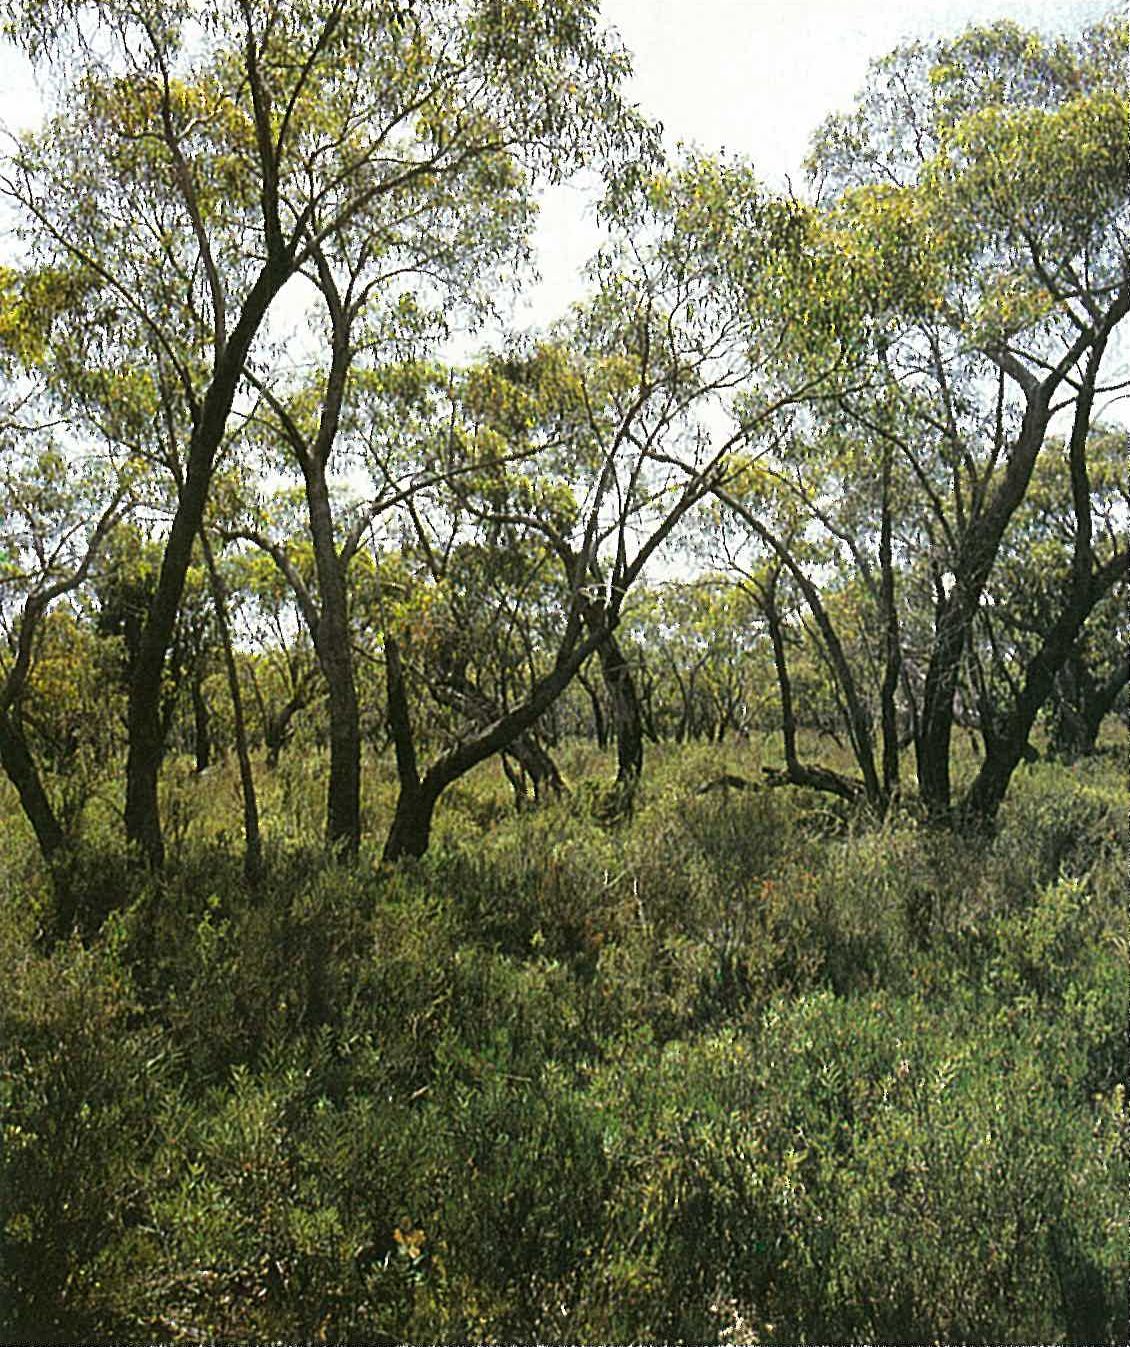 Gippsland Plain; Leptospermum myrsinoides heathland/woodland. Eucalyptus willisii woodland, with heathy understorey including Banksia marginata, Leptospermum myrsinoide, Monotoca scoparia, Pteridium esculentum, Ricinocarpus pinifolius and Xanthorrhoea minor. Holey Plains State Park.